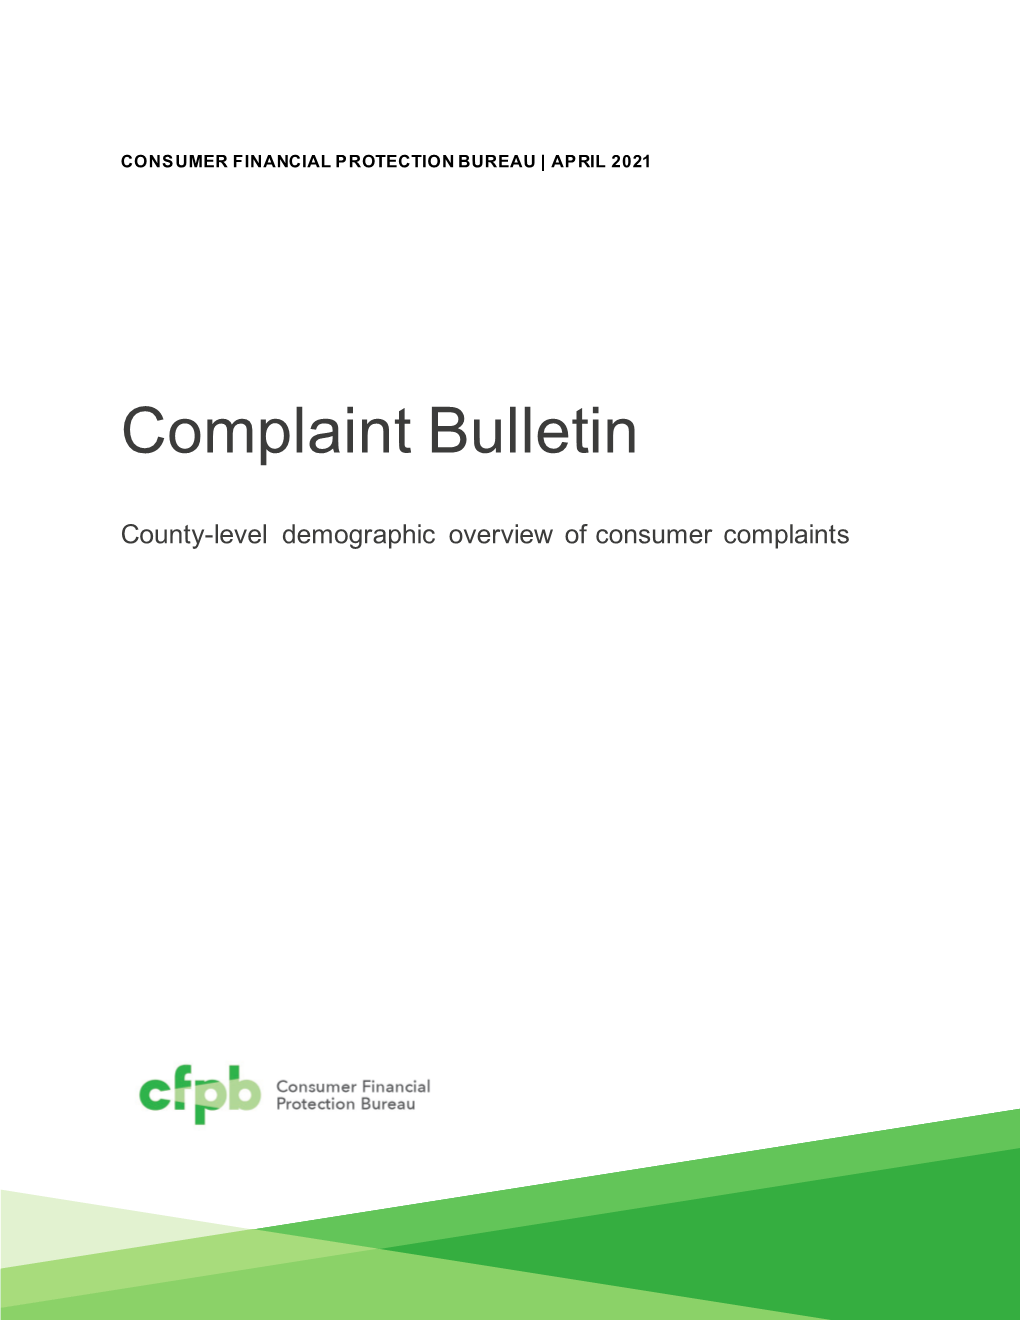 Consumer Complaint Bulletin